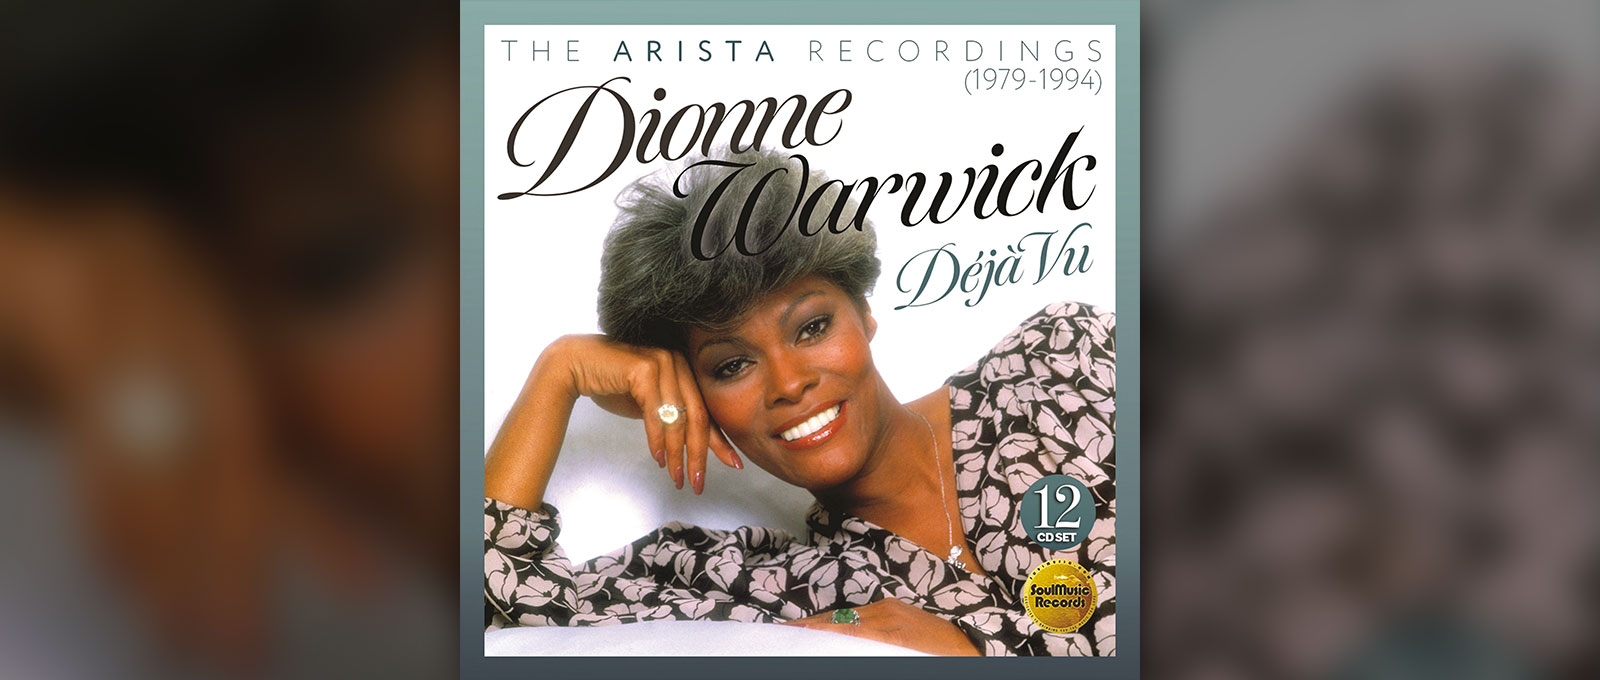 Dionne Warwick Arista Records